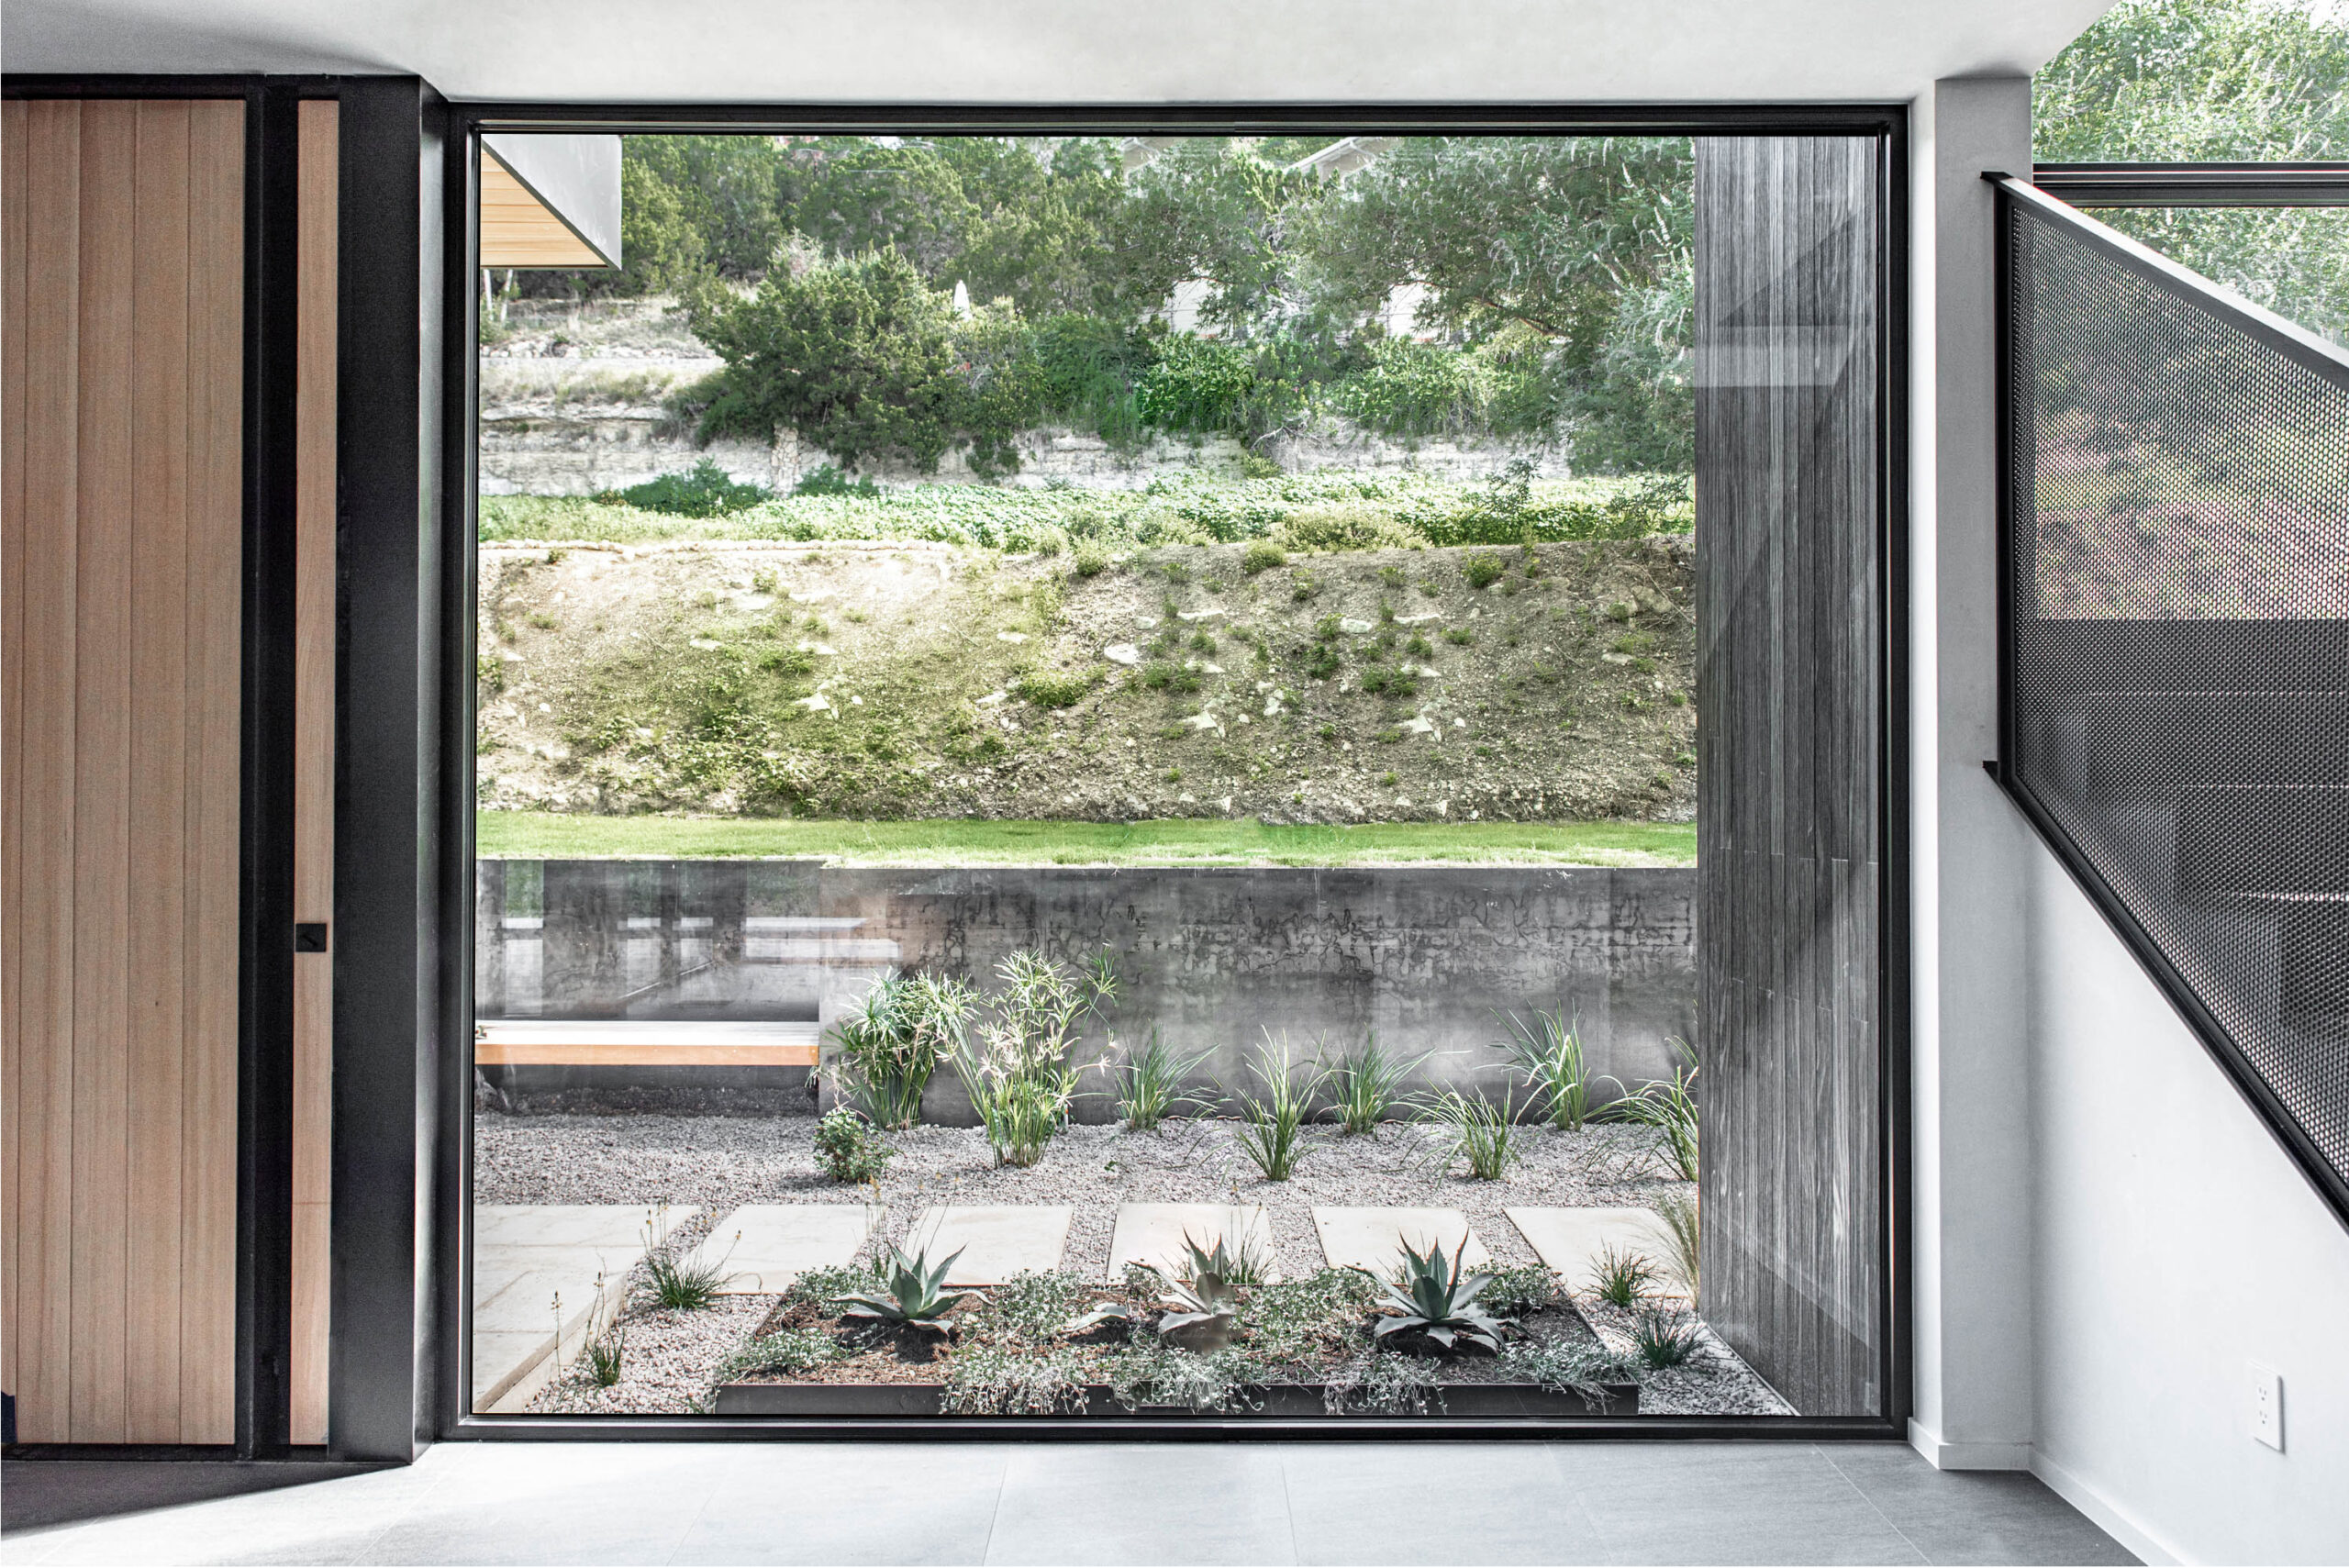 Luxview Glass Window and Outdoor Garden